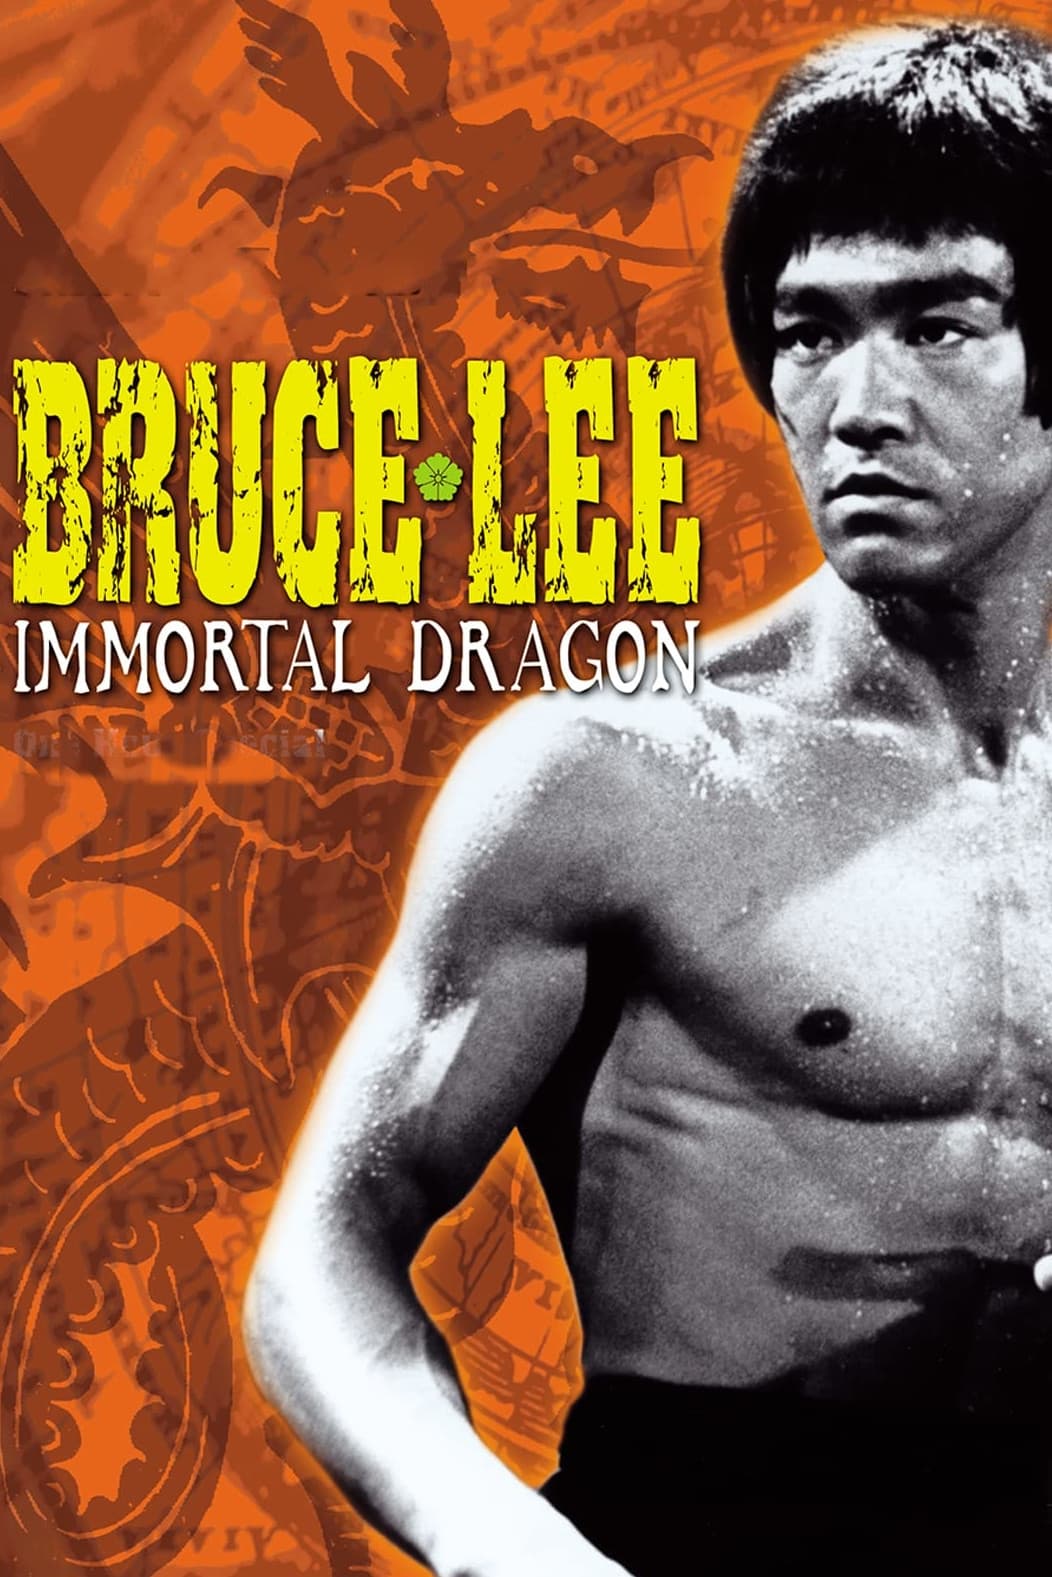 Bruce Lee: The Immortal Dragon (1994)